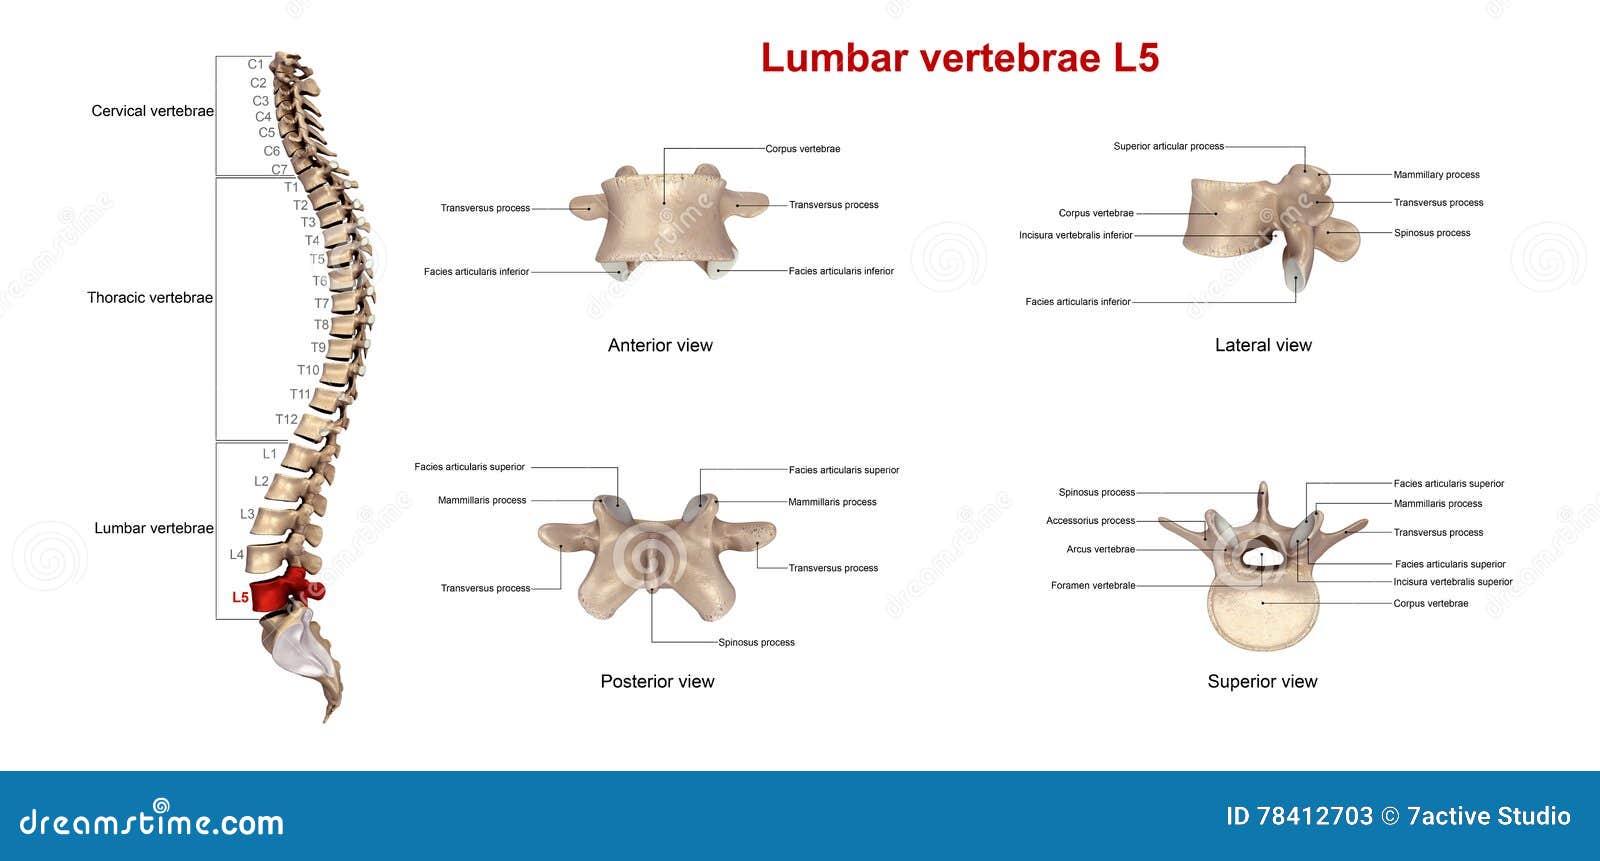 Lumbar vertebrae L5 stock illustration. Illustration of neck - 78412703